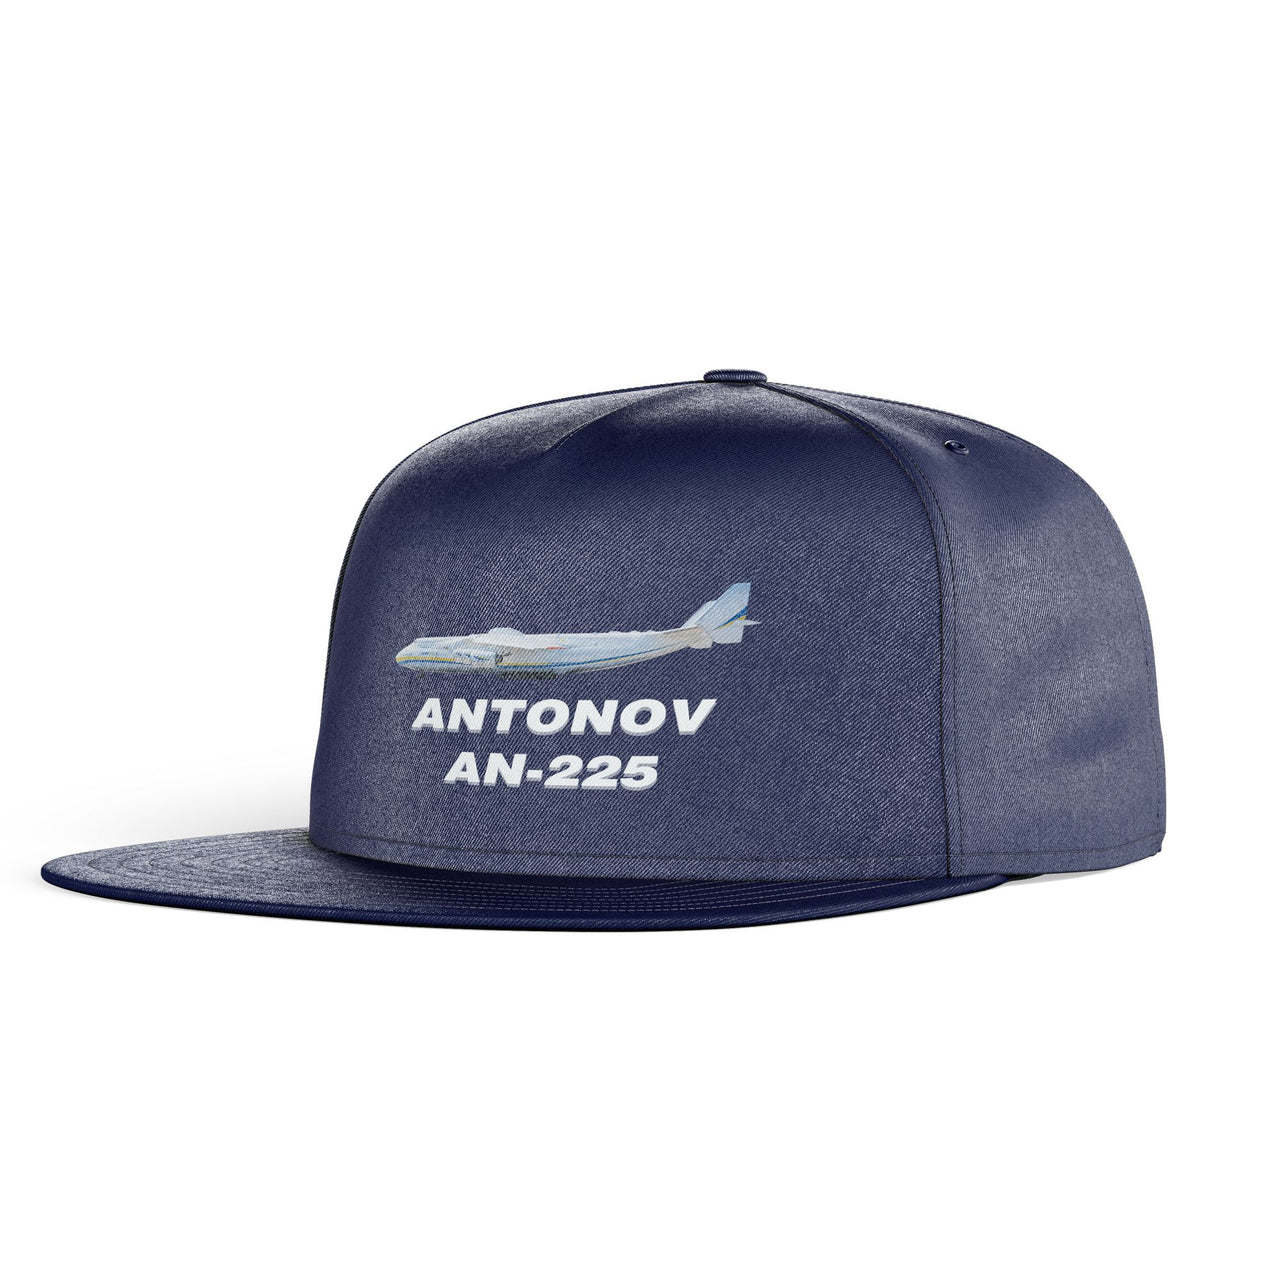 The Antonov AN-225 Designed Snapback Caps & Hats